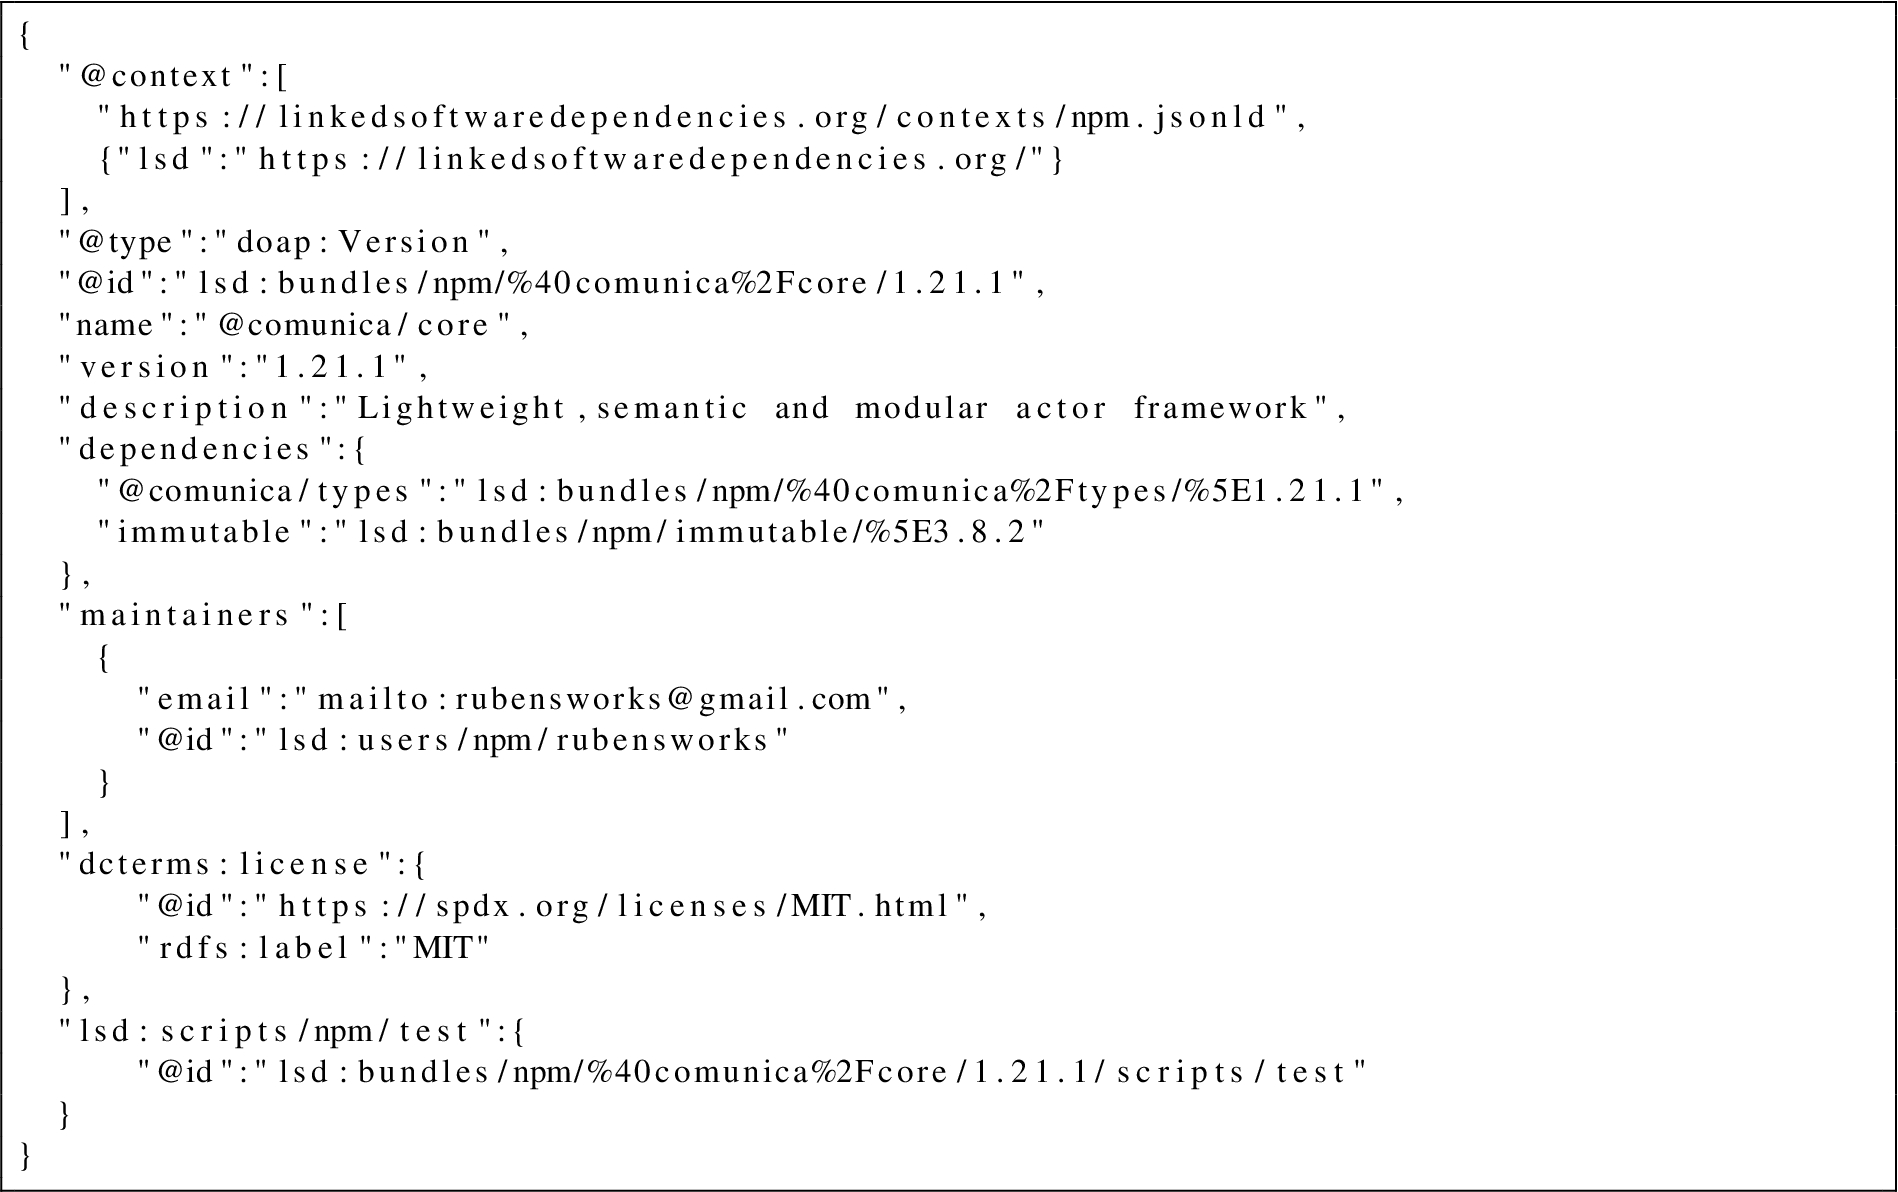 Part of the JSON-LD contents of https://linkedsoftwaredependencies.org/bundles/npm/@comunica/core/1.21.1.